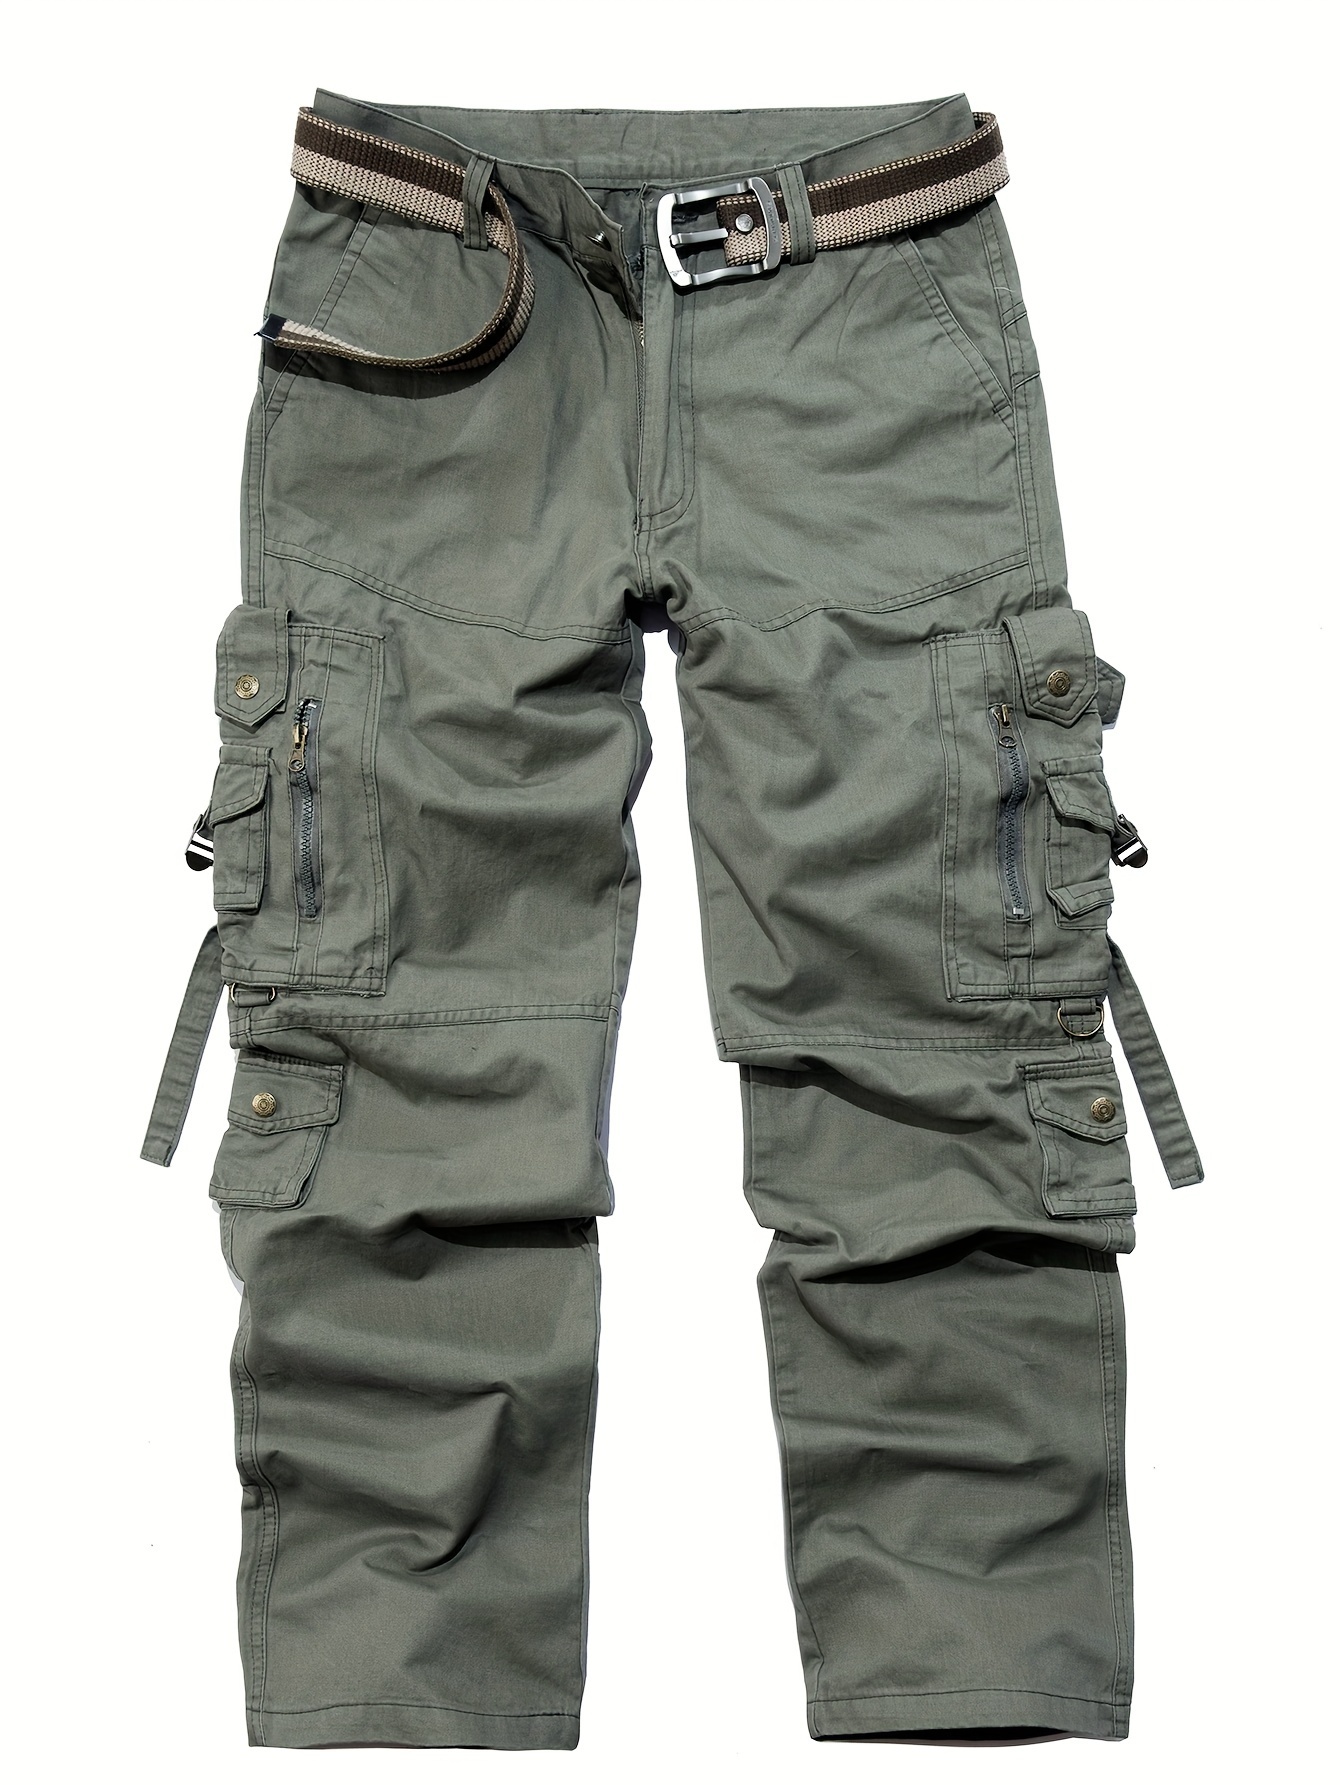 Mens Multi Pockets Cargo Pant Work Trousersd796772